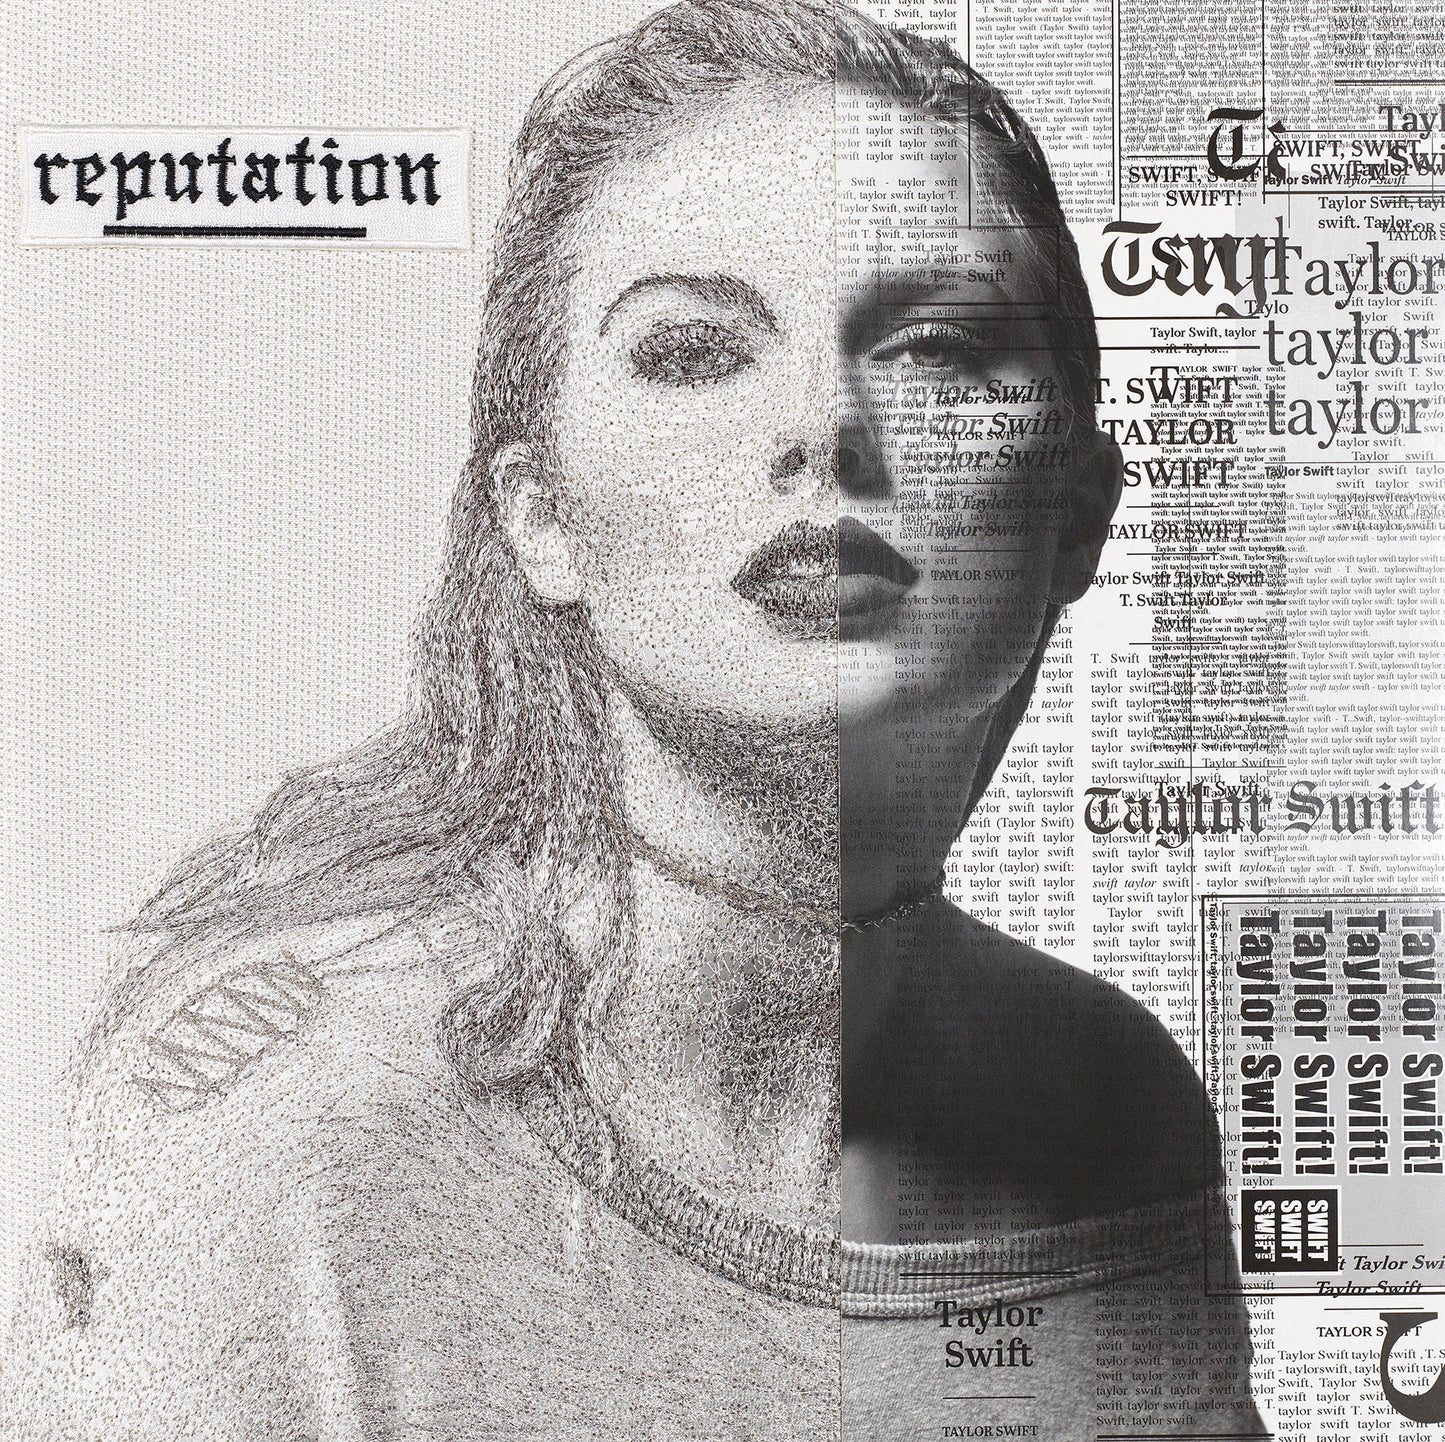 Taylor Swift Reputation 12x12